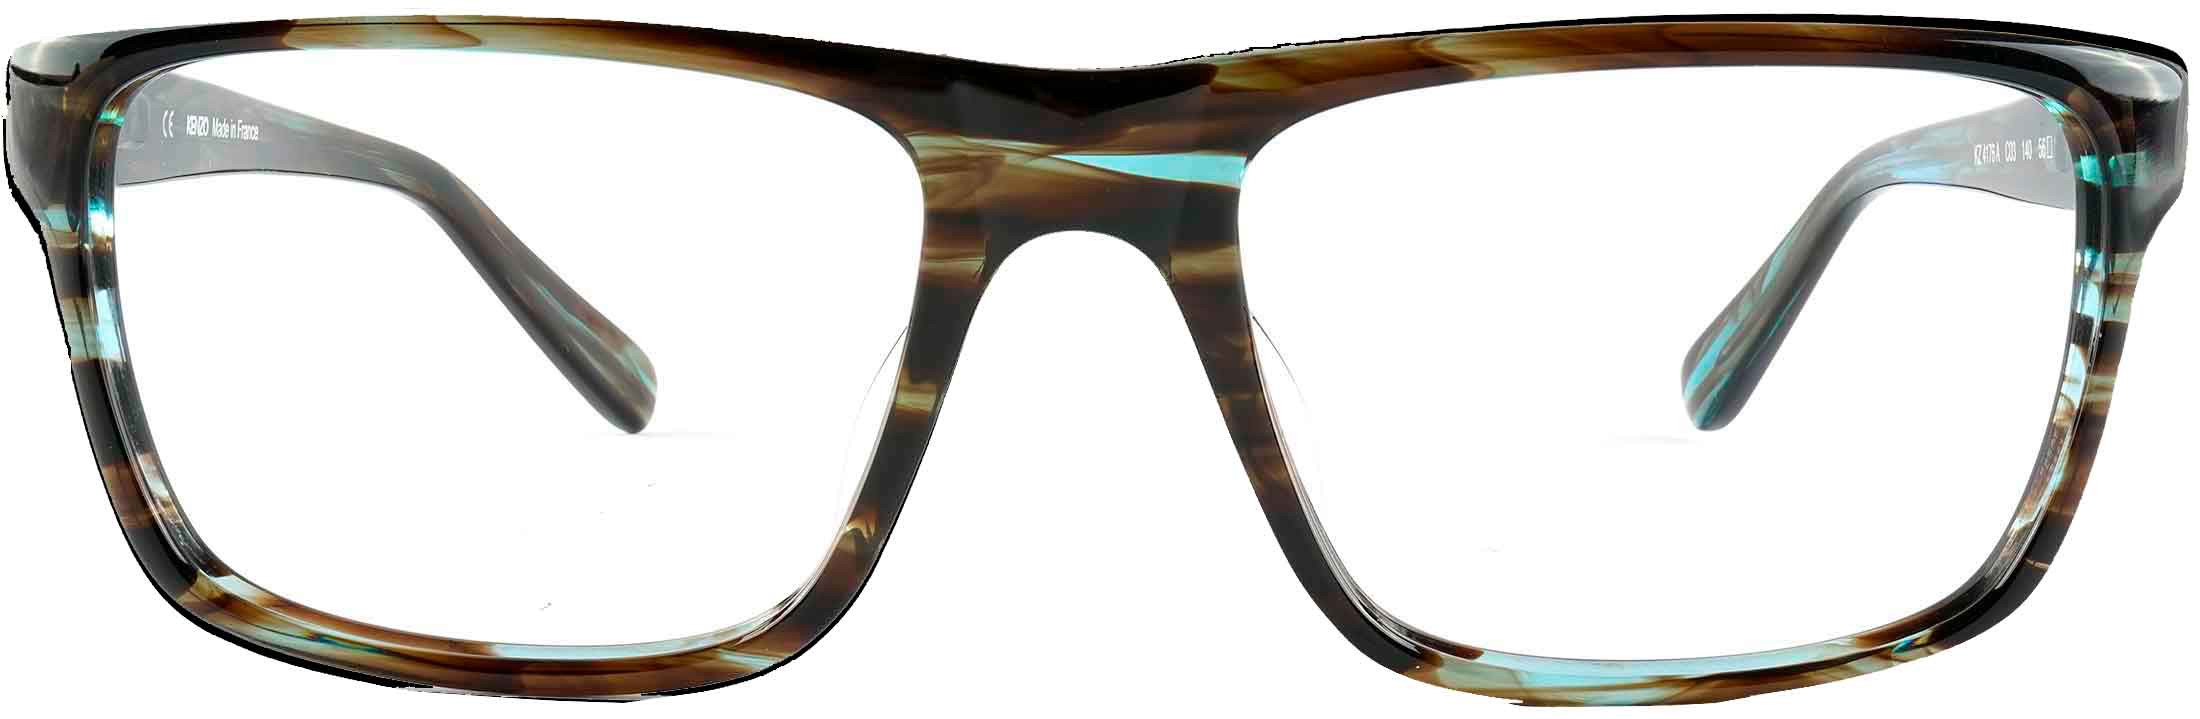 kenzo eyeglasses frames